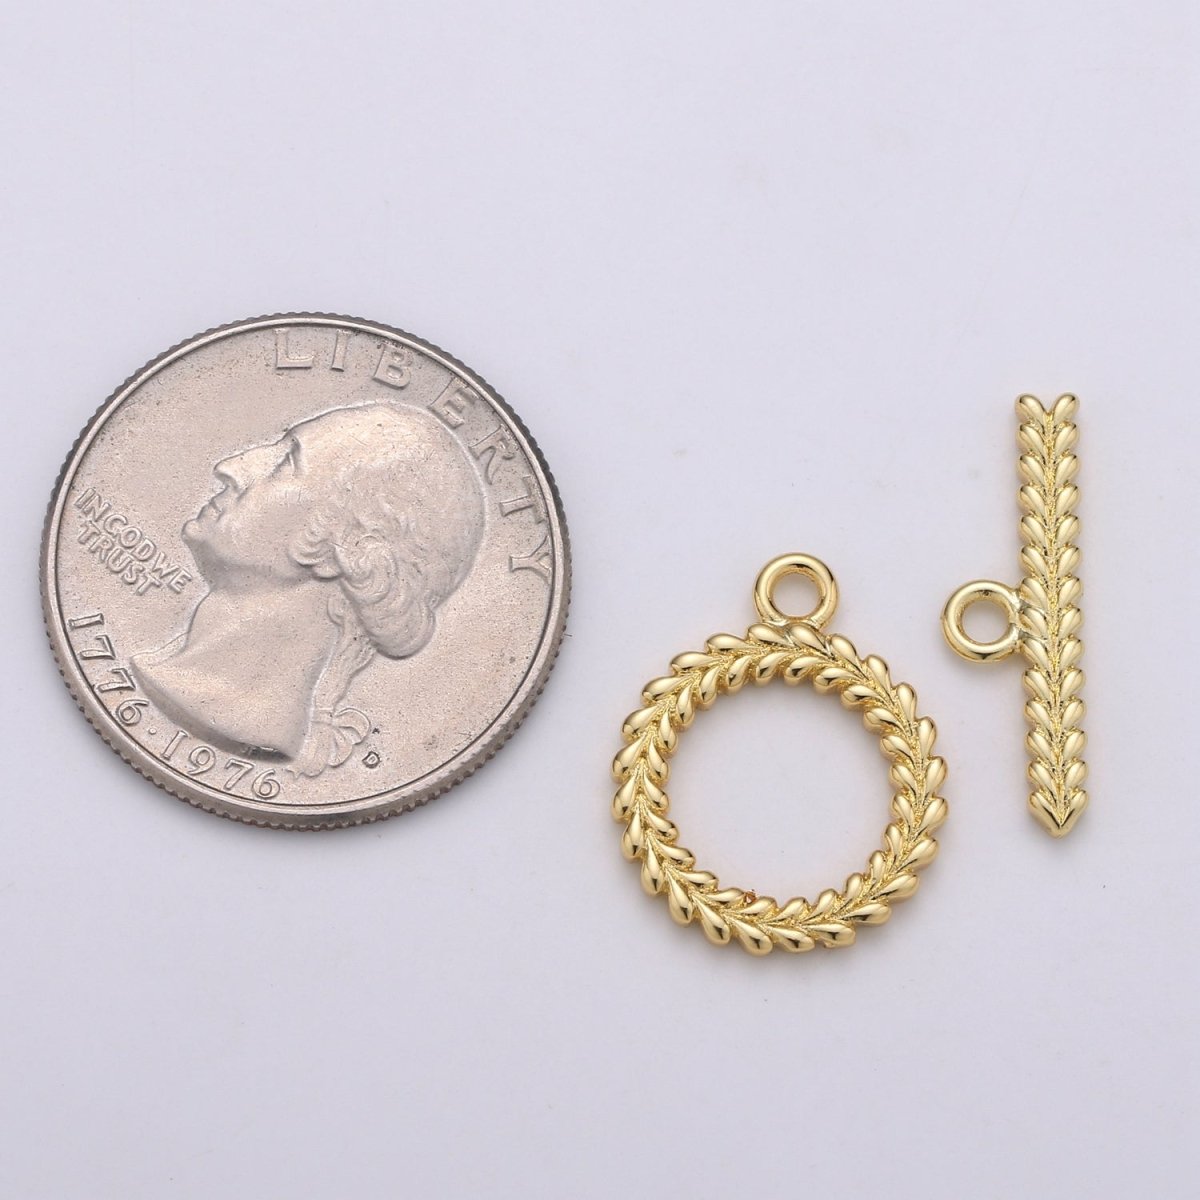 Gold Filled Wreath Classic Twist Toggle Clasp For DIY Jewelry Making L-065~L-066 - DLUXCA